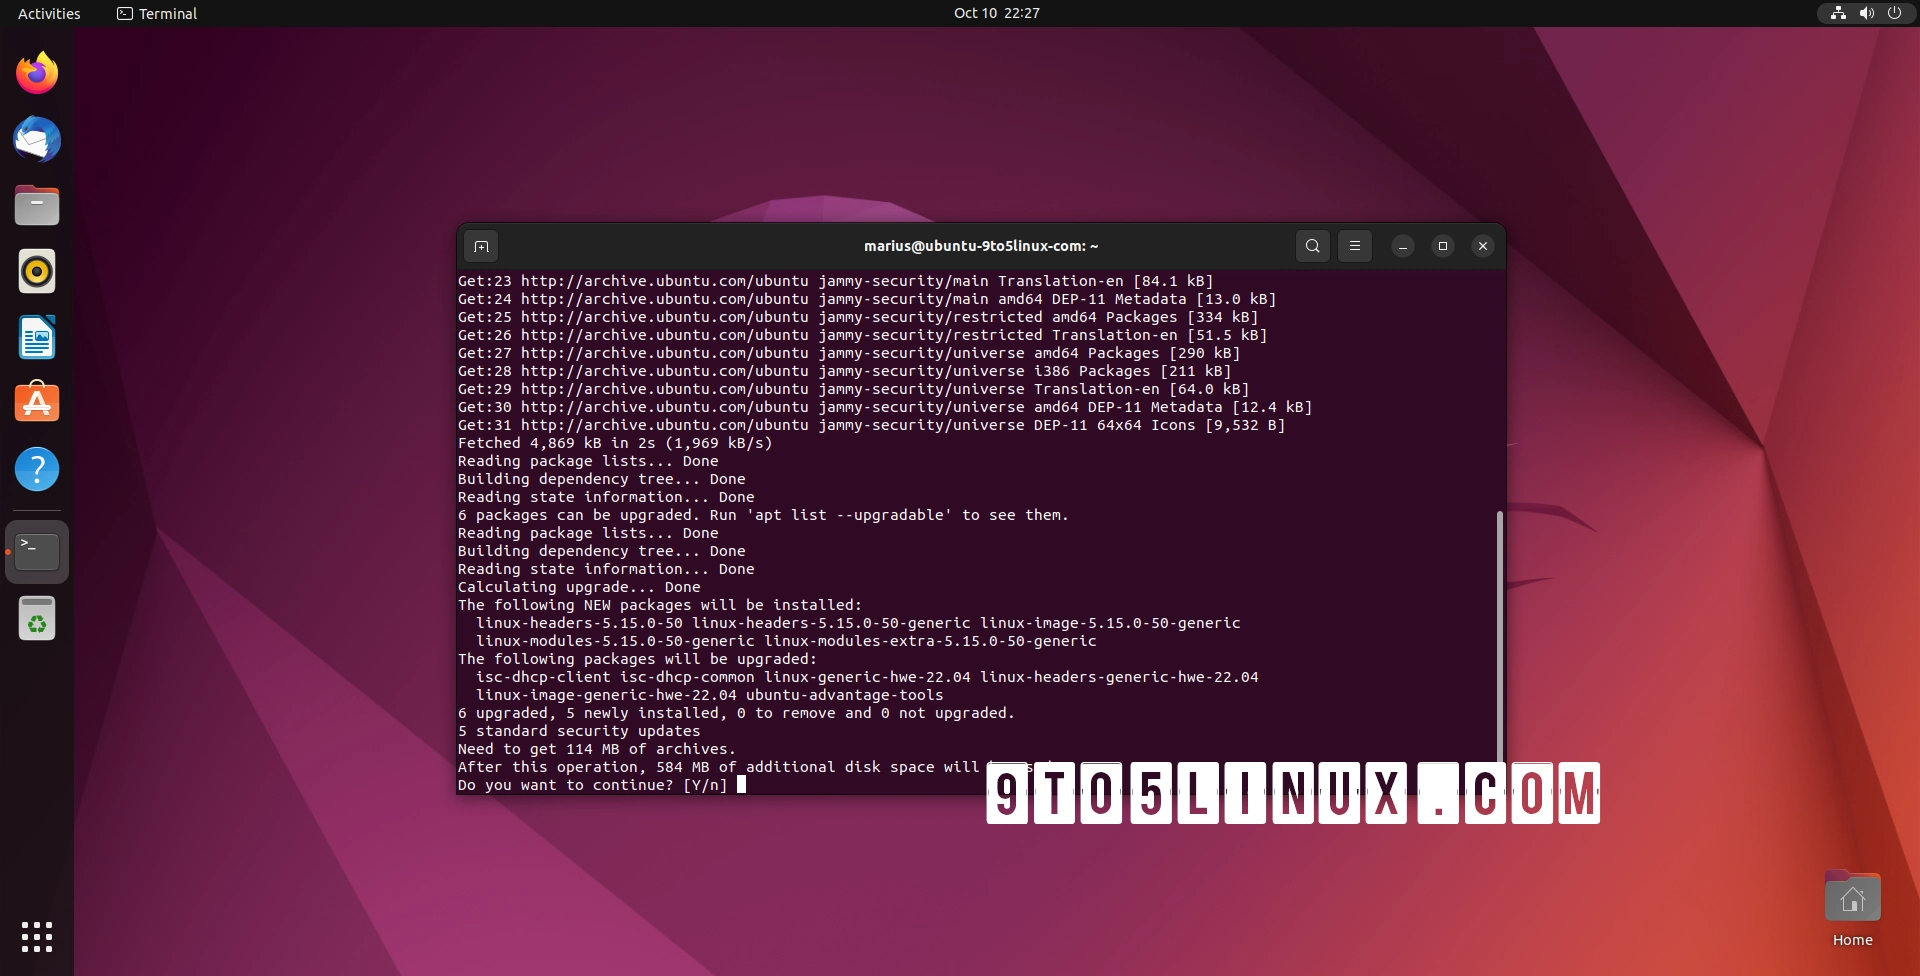 New Ubuntu Linux Kernel Security Updates Fix 16 Vulnerabilities, Patch Now